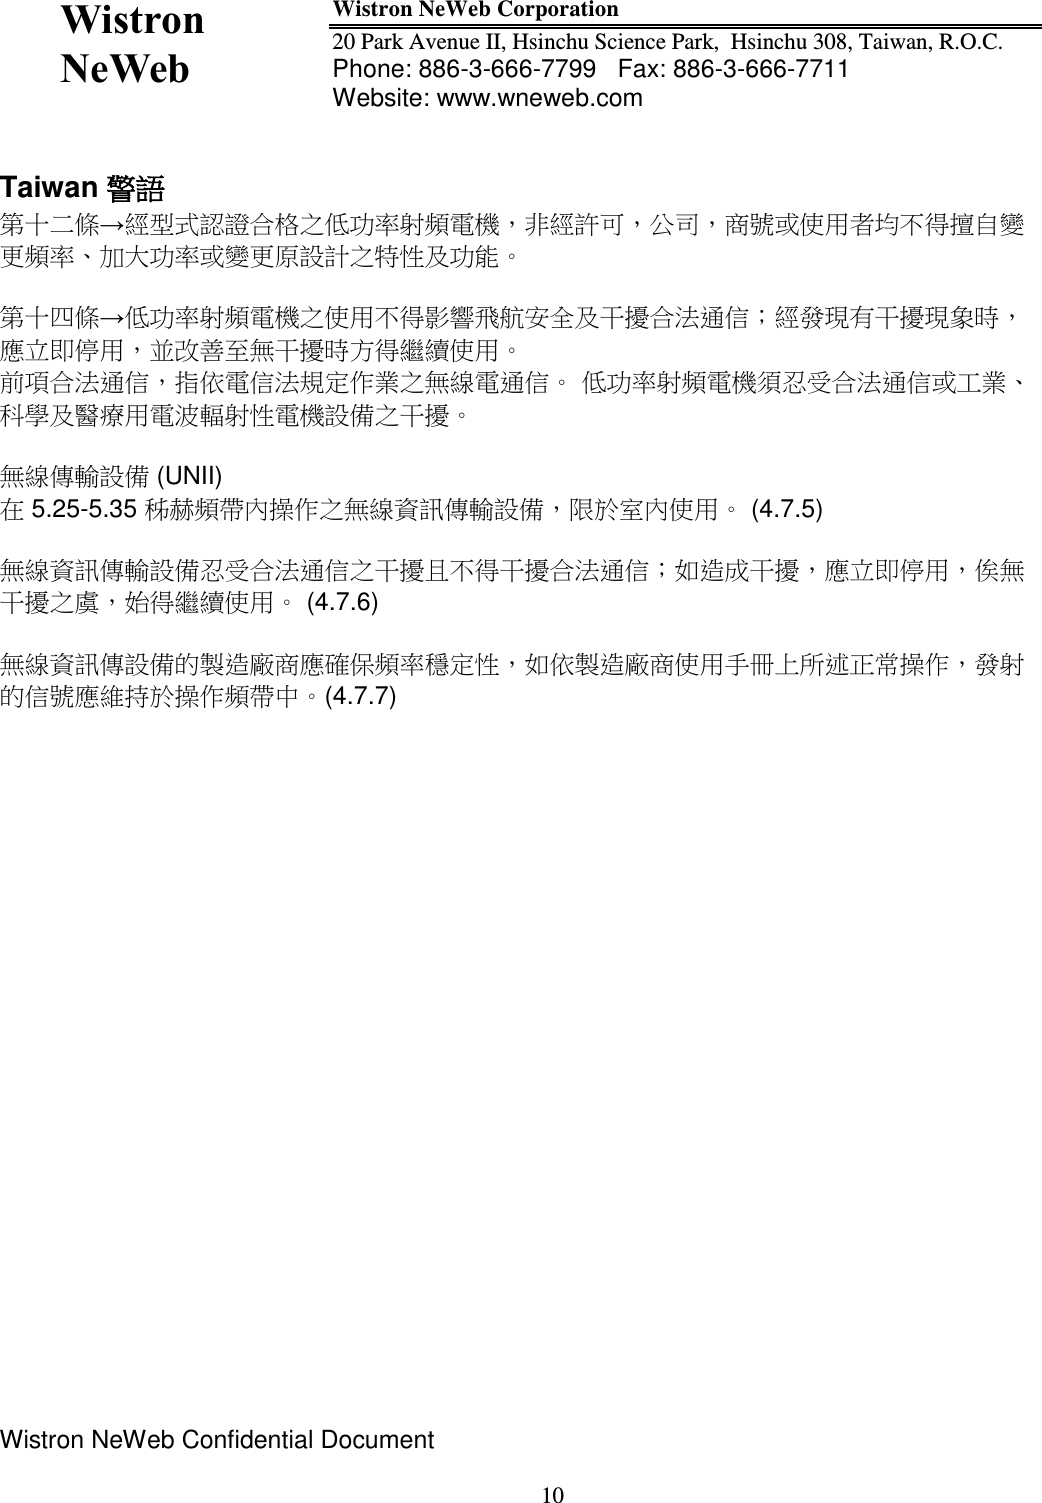  Wistron NeWeb  Wistron NeWeb Corporation 20 Park Avenue II, Hsinchu Science Park,  Hsinchu 308, Taiwan, R.O.C. Phone: 886-3-666-7799   Fax: 886-3-666-7711 Website: www.wneweb.com                 Wistron NeWeb Confidential Document     10 Taiwan 警語 第十二條經型式認證合格之低󰥈率射頻電機，非經許可，公司，商󳴈或使用者均不得擅自變更頻率󰥉大󰥈率或變更原設計之特性及󰥈能  第十四條低󰥈率射頻電機之使用不得影響飛航安󰠑及干擾合法通信；經發現有干擾現象時，應立即停用，並改善至無干擾時方得繼續使用 前項合法通信，指依電信法規定作業之無線電通信 低󰥈率射頻電機須忍受合法通信或工業科學及醫療用電波輻射性電機設備之干擾  無線傳輸設備 (UNII)  在 5.25-5.35 秭赫頻帶󰠐操作之無線資訊傳輸設備，限於室󰠐使用 (4.7.5)  無線資訊傳輸設備忍受合法通信之干擾且不得干擾合法通信；如造成干擾，應立即停用，俟無干擾之󳴇，始得繼續使用 (4.7.6)  無線資訊傳設備的製造廠商應確保頻率穩定性，如依製造廠商使用手冊上所述正常操作，發射的信󳴈應維持於操作頻帶中(4.7.7)    